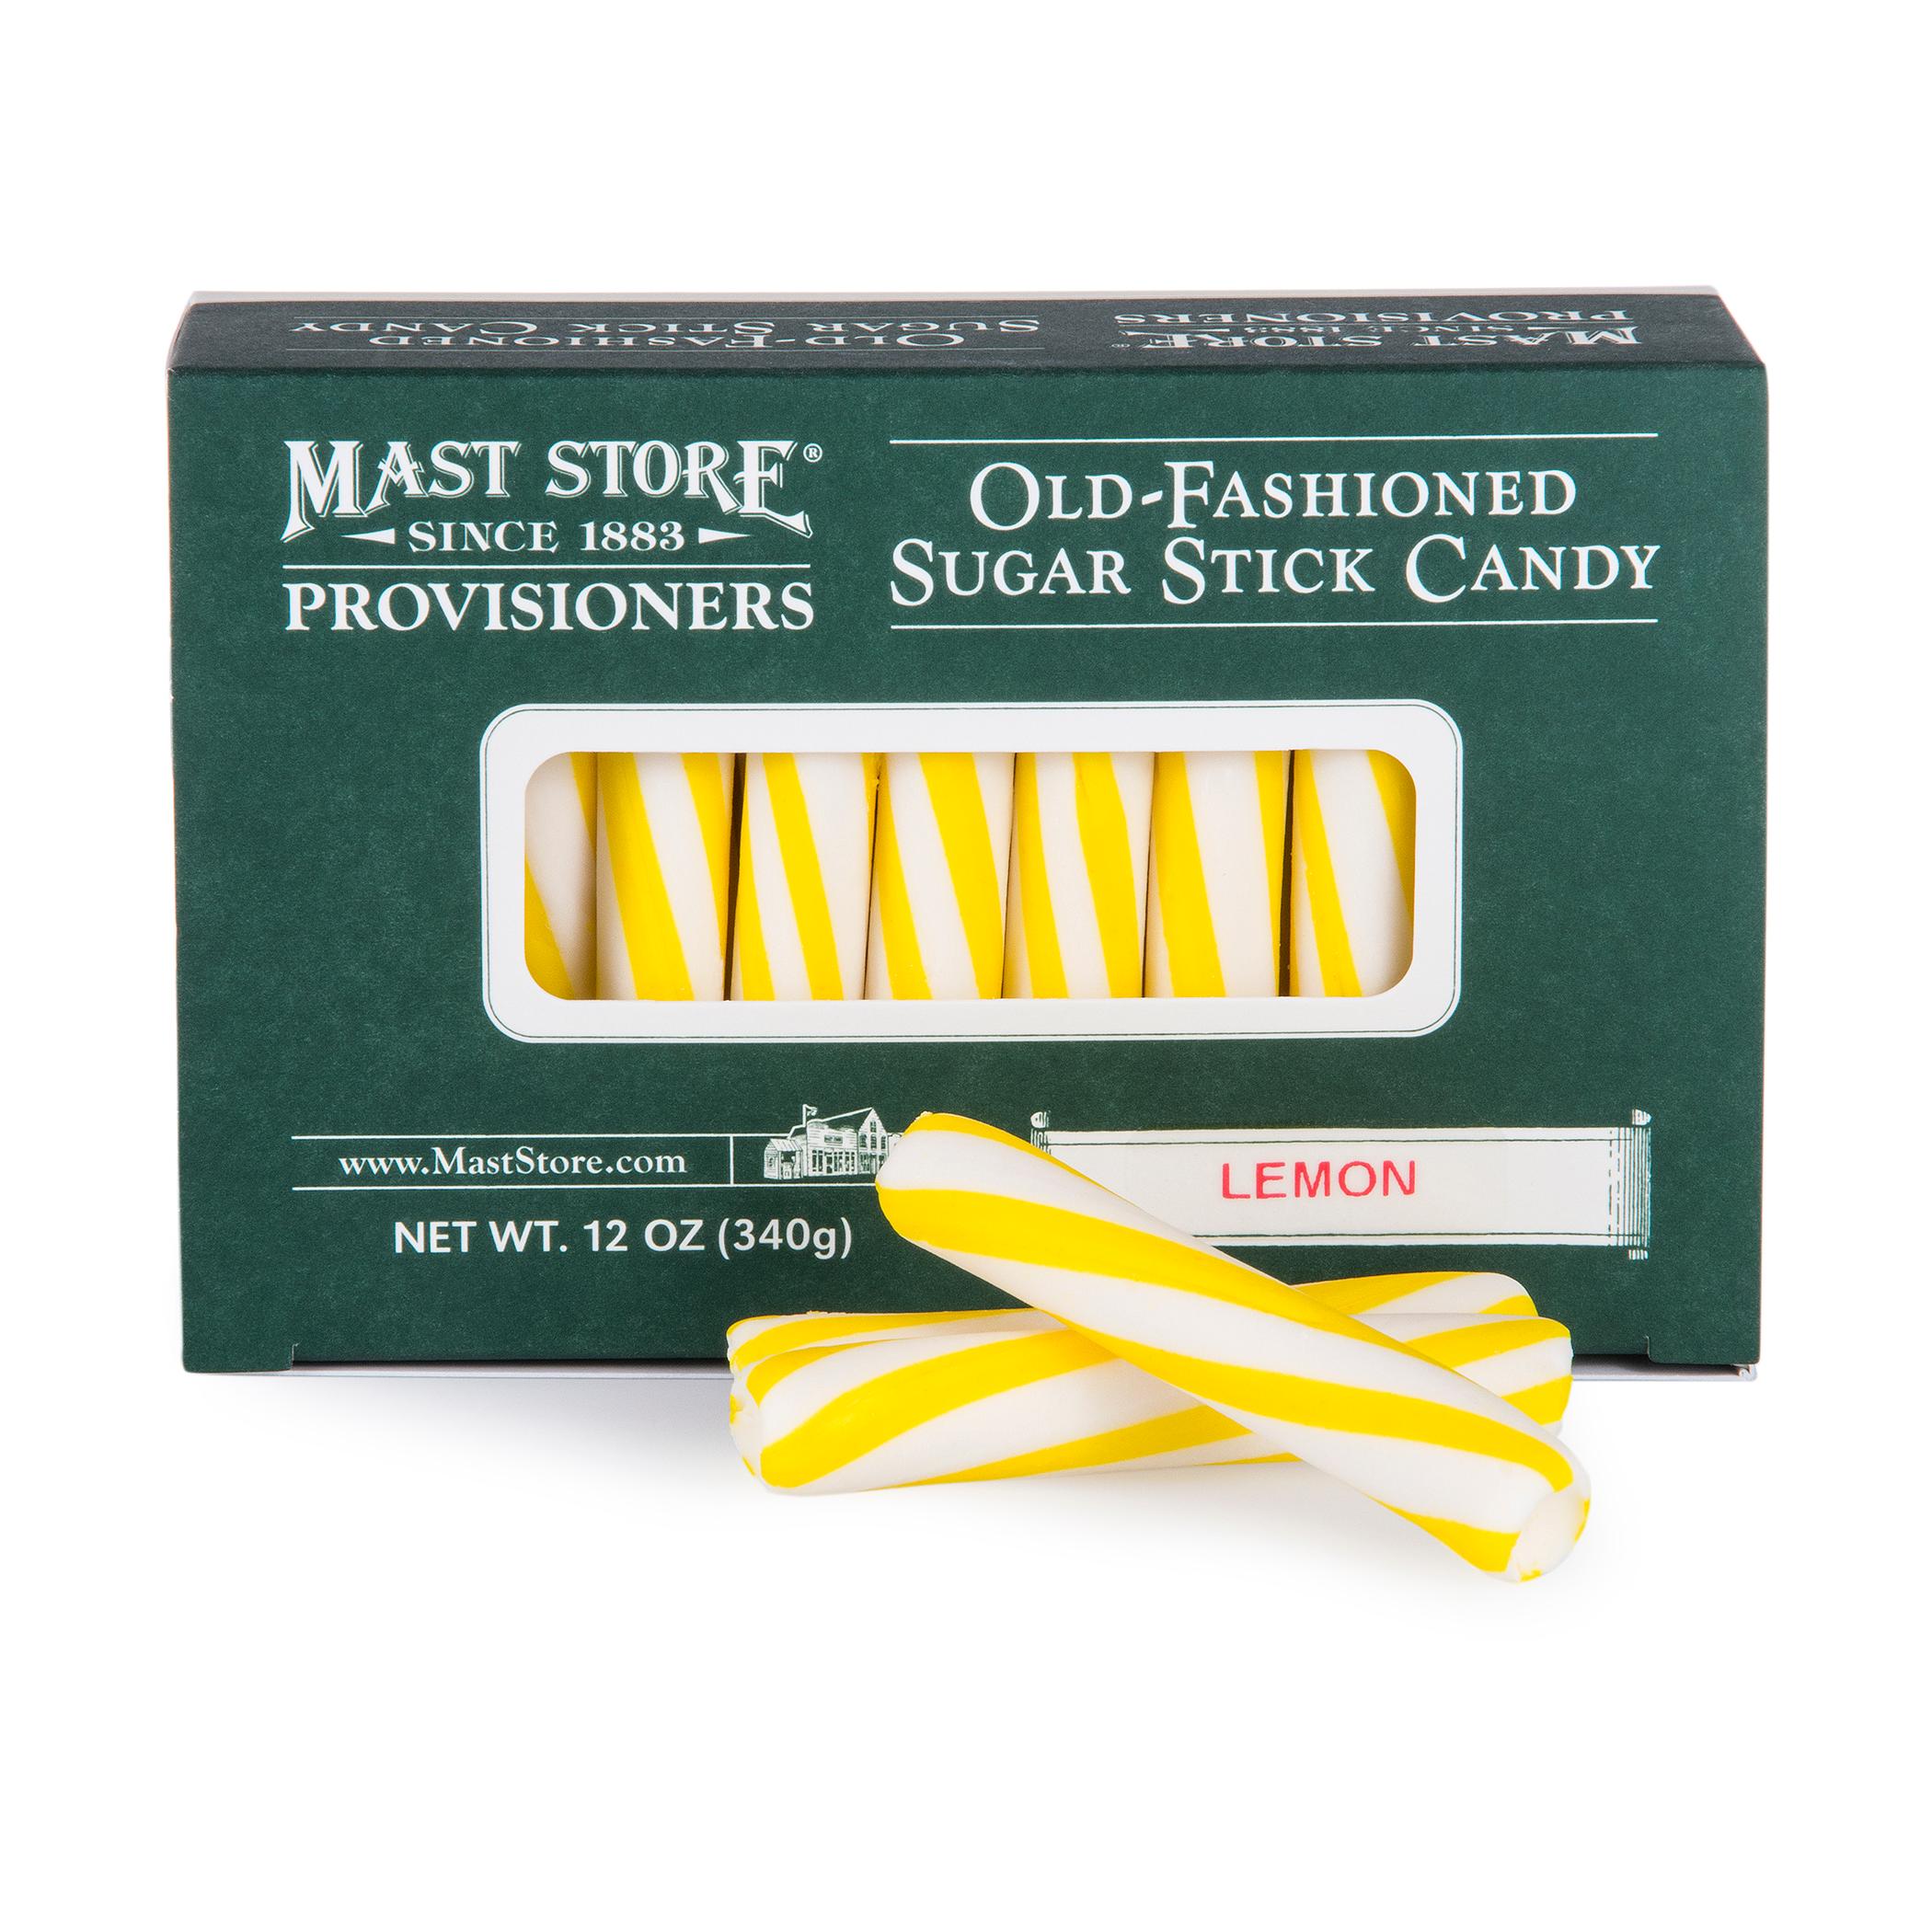  Mast Store Provisioners Lemon Old- Fashioned Sugar Stick Candy